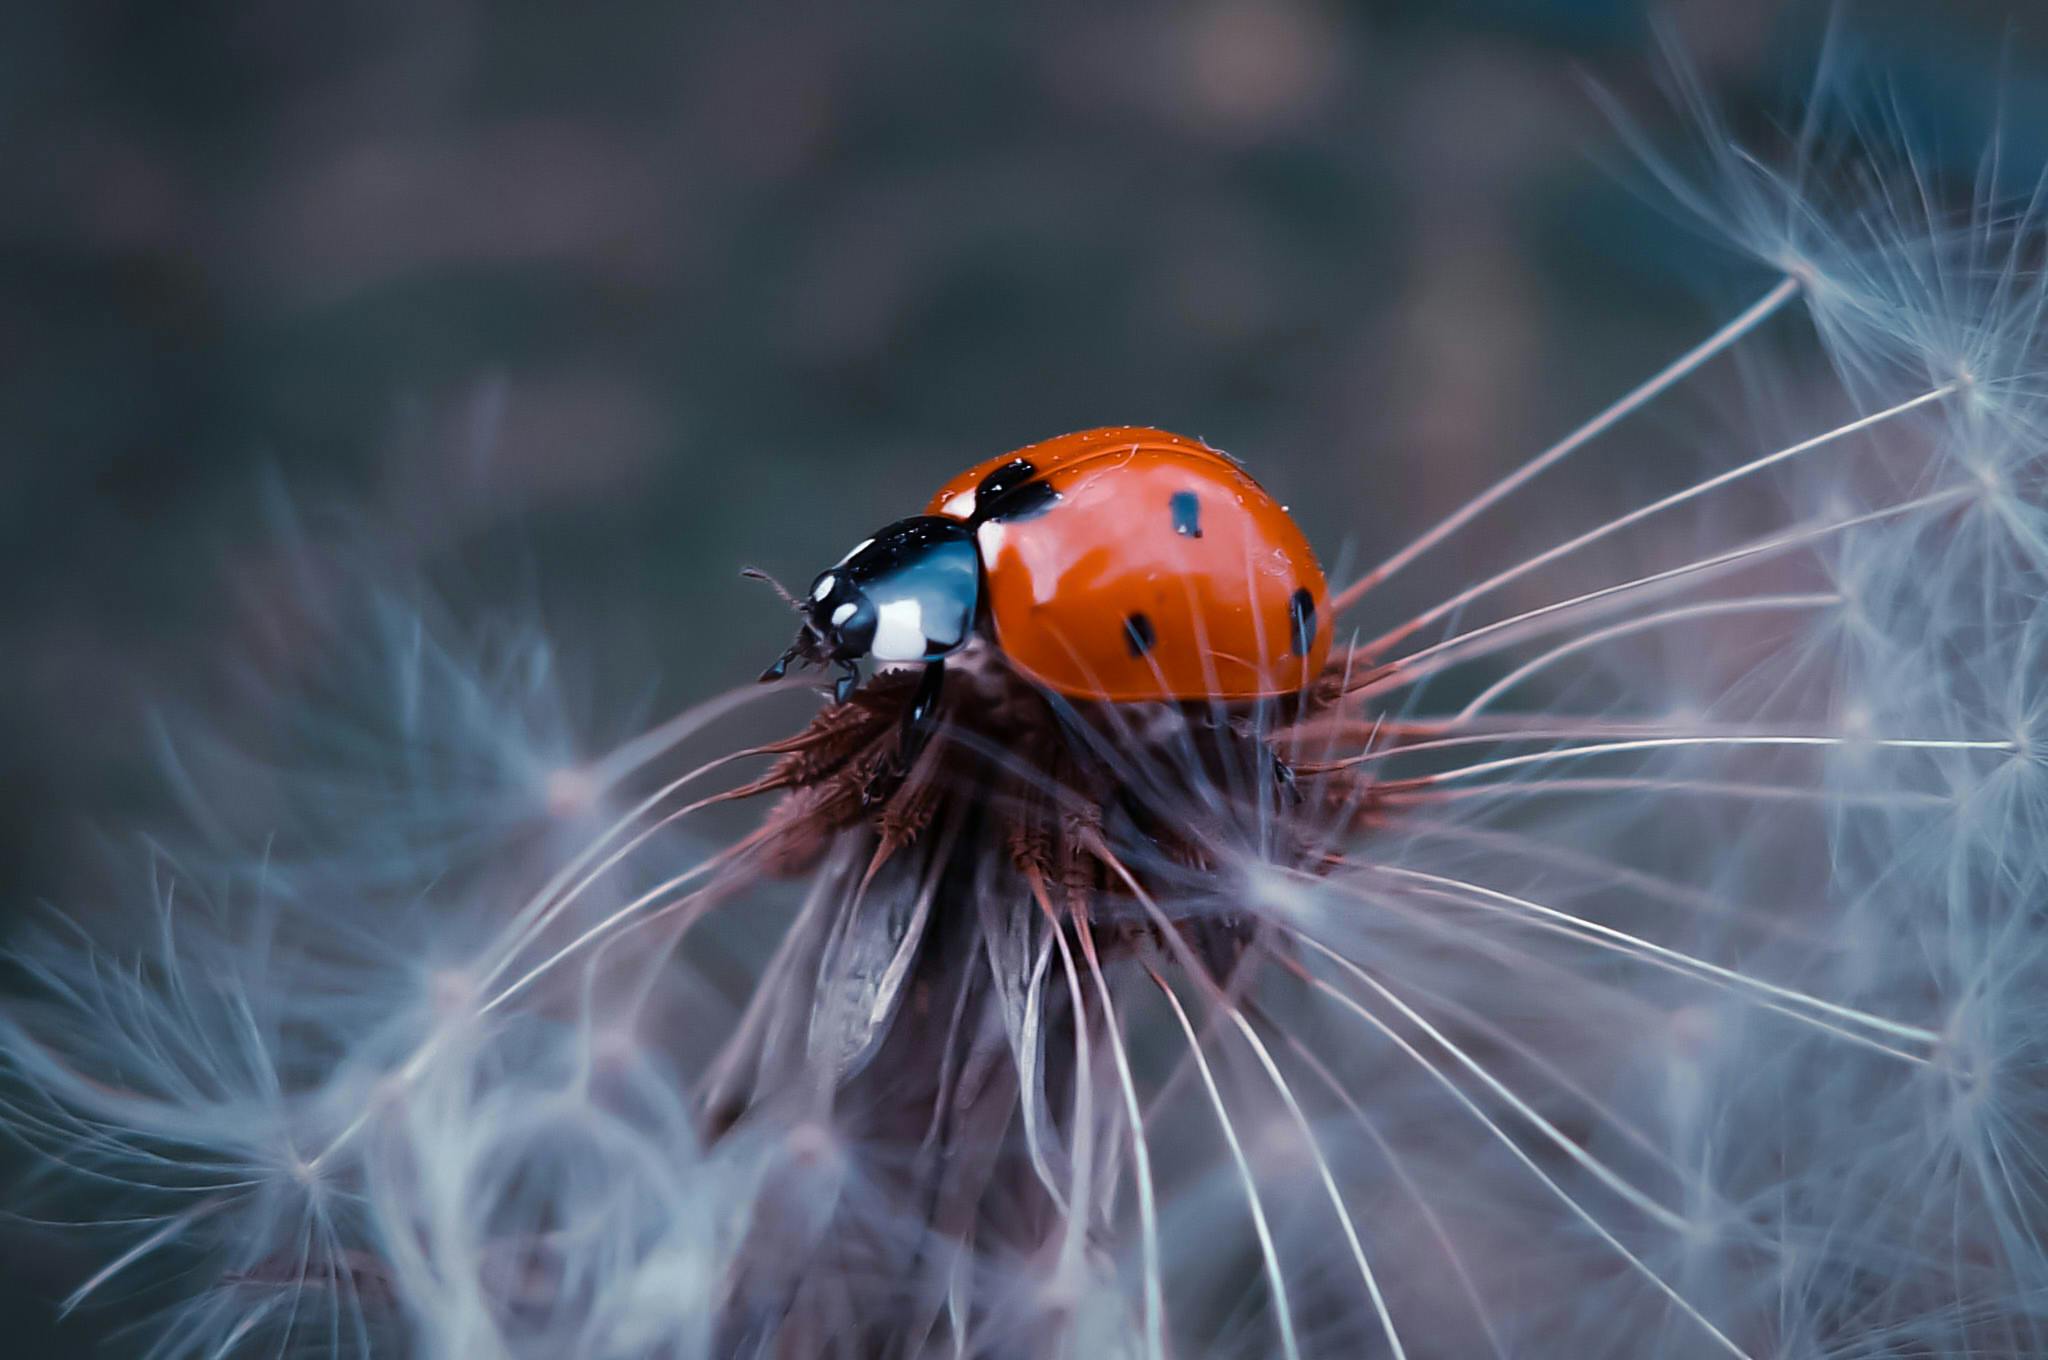 Free stock photo of #macro #spring #nature #small #ladybird #wisps